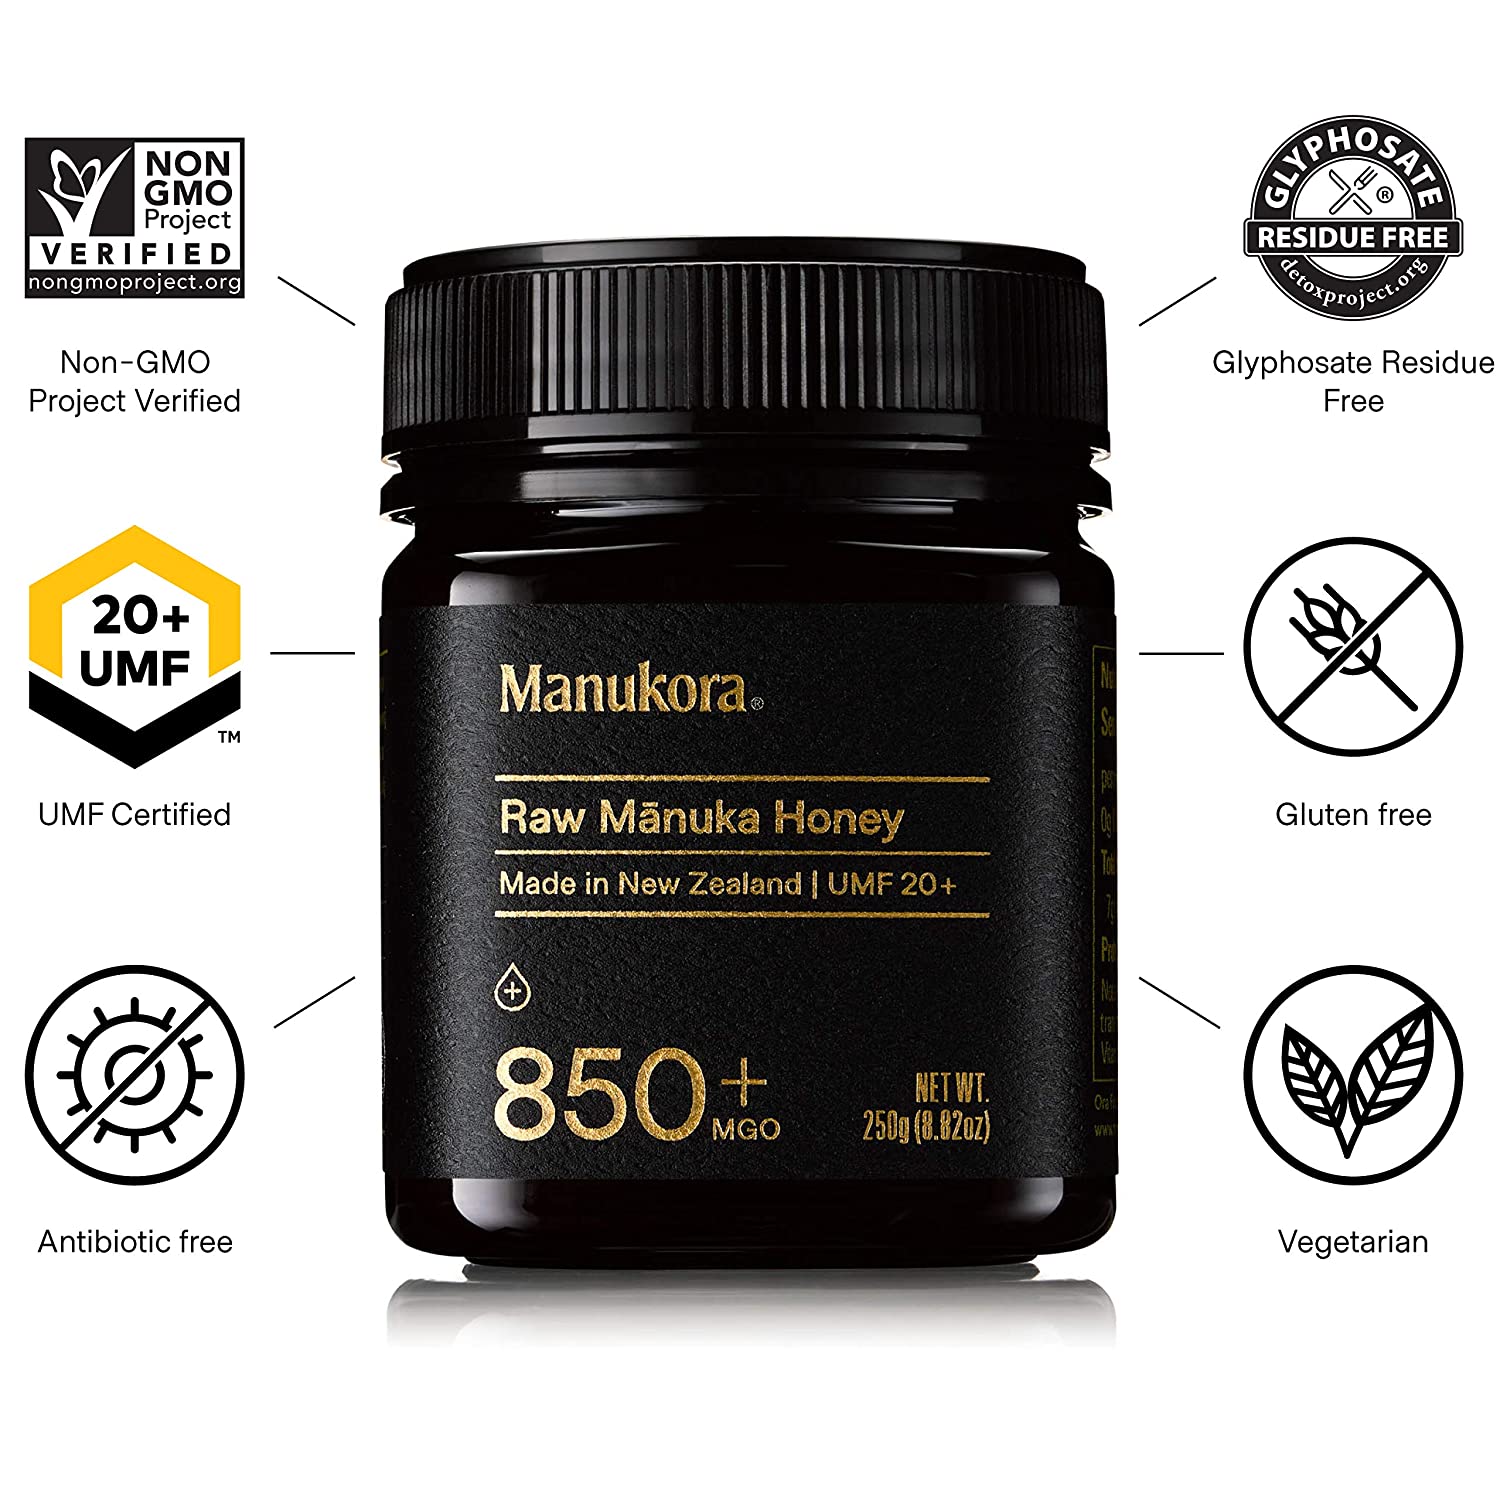 Manukora UMF 20+/MGO 850+ Raw Mānuka Honey (250g/8.8oz) Authentic Non-GMO New Zealand Honey, UMF & MGO Certified, Traceable from Hive to Hand